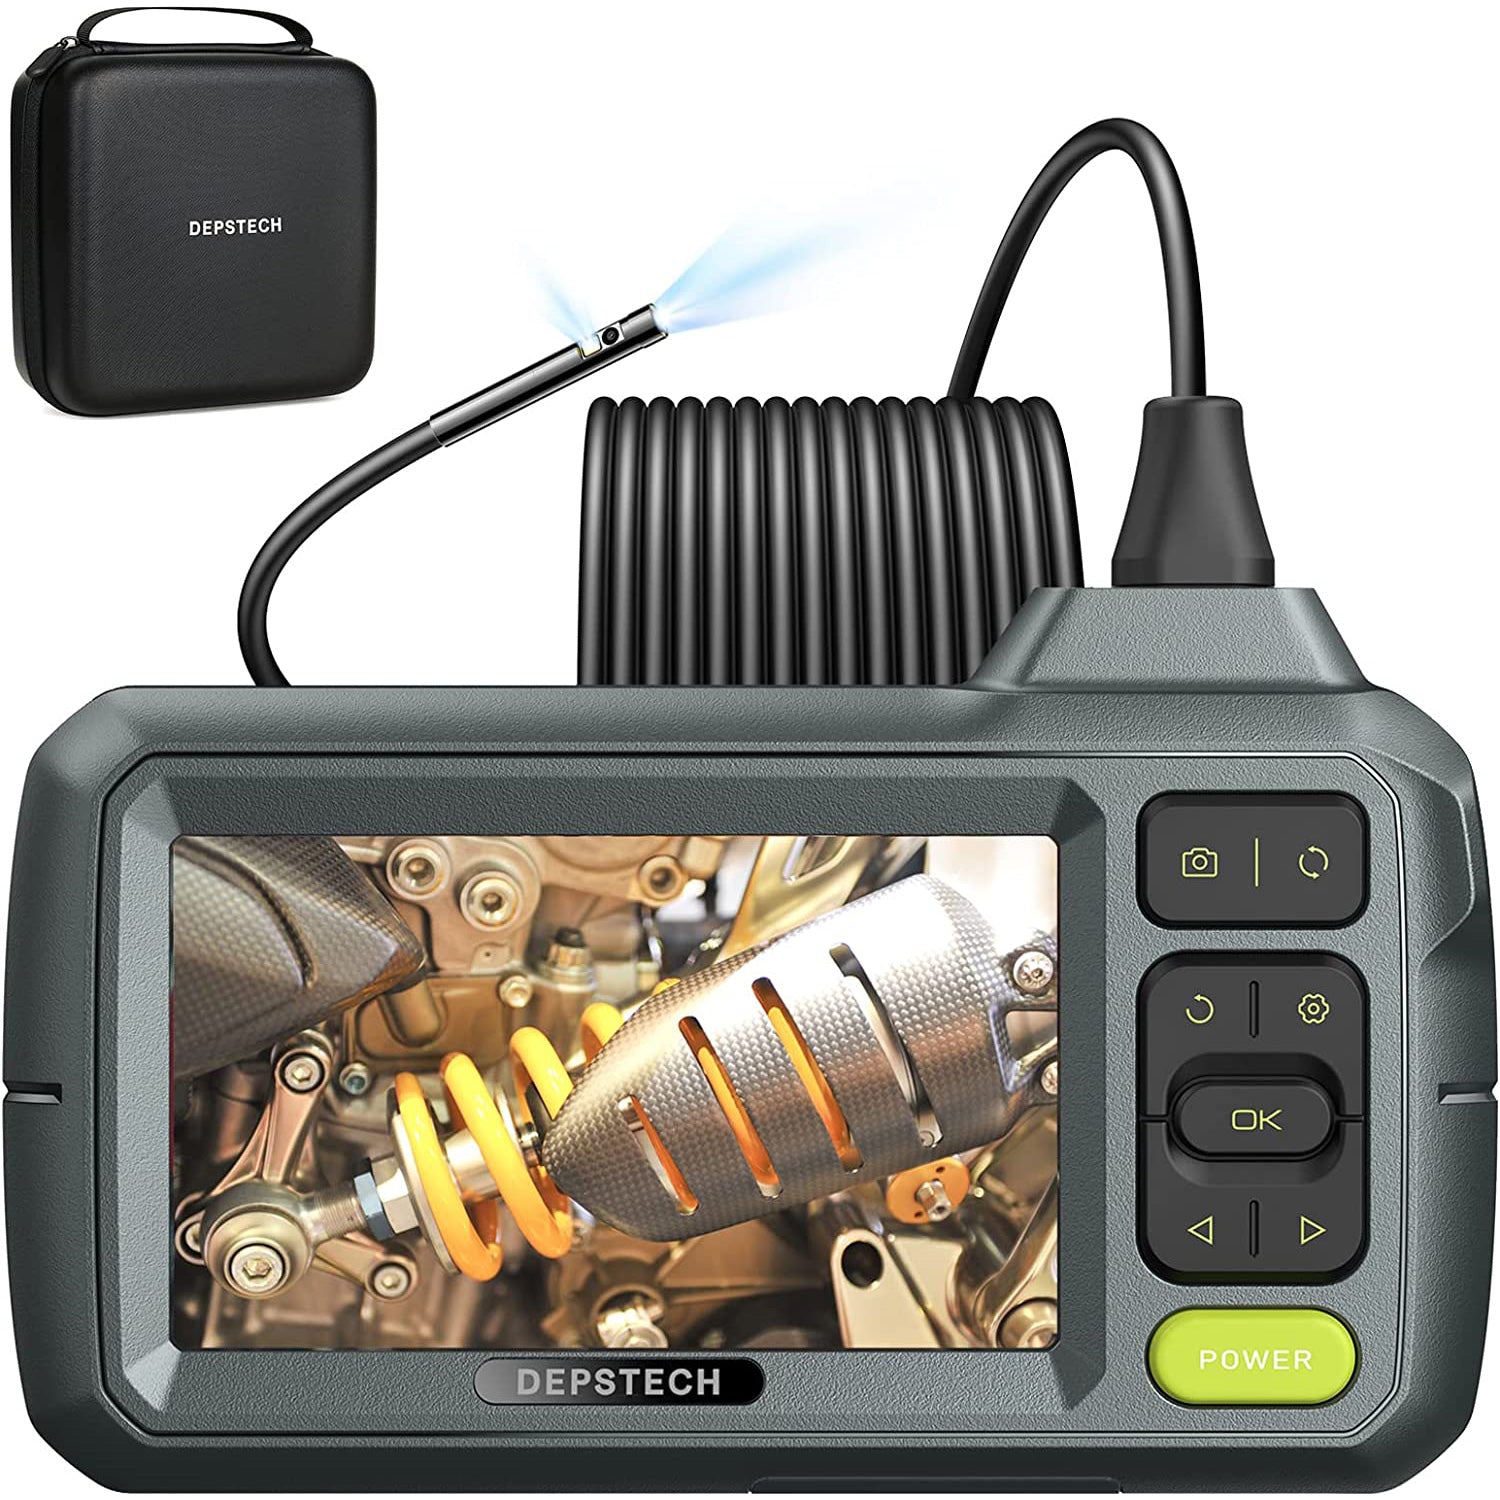 WiFi Endoscope Inspection Camera - Depstech WF010 